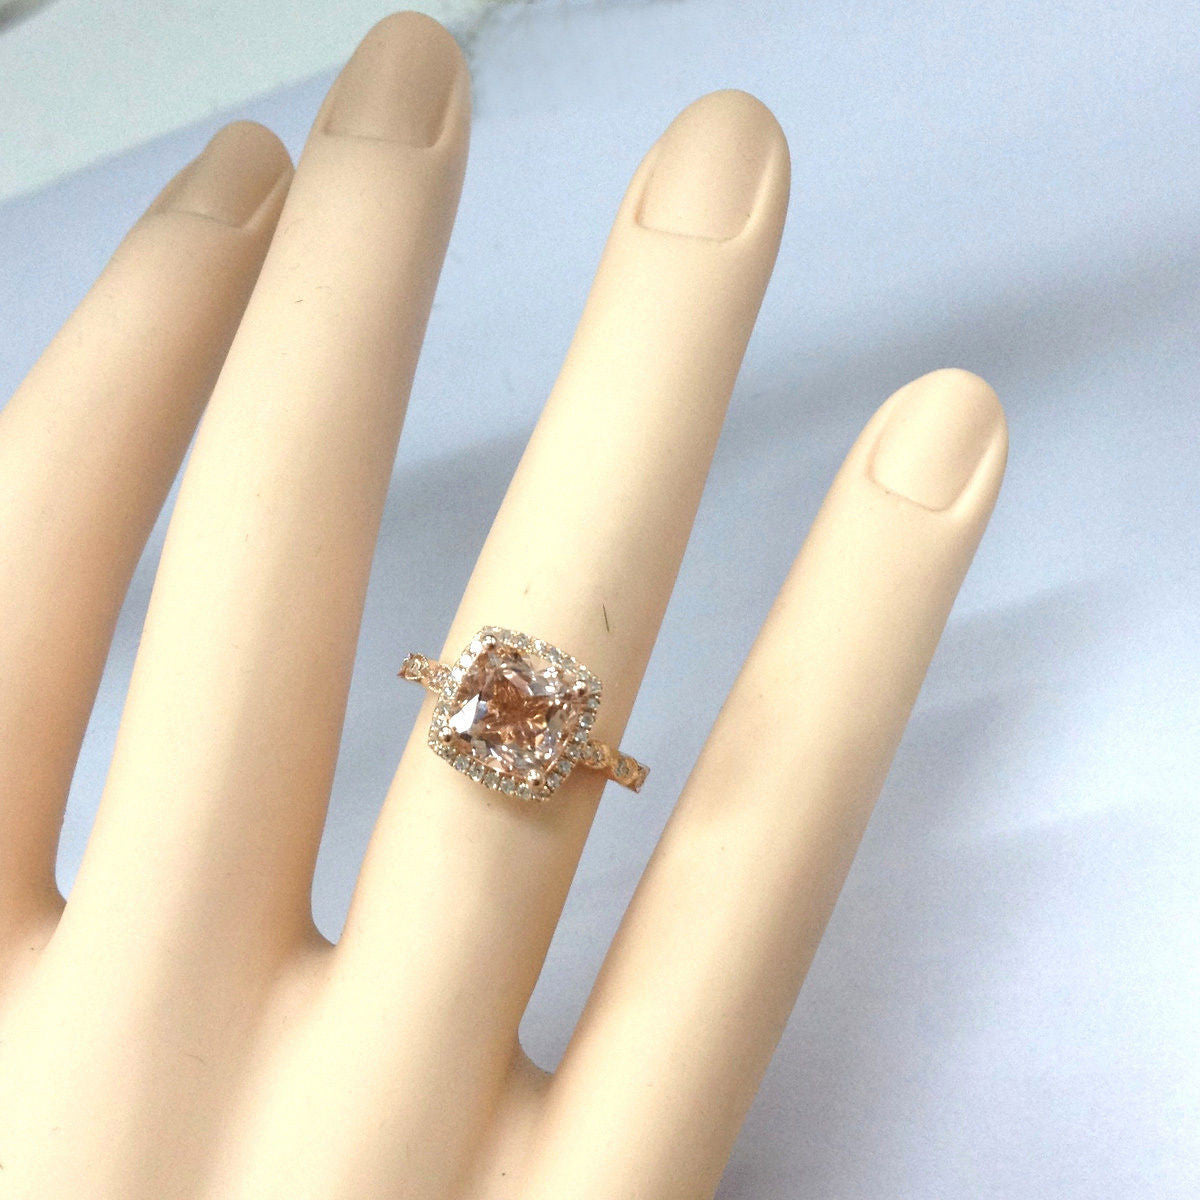 Cushion Morganite Engagement Ring Pave Diamond Wedding 14K Rose Gold 8mm, Art Deco Antique - Lord of Gem Rings - 4